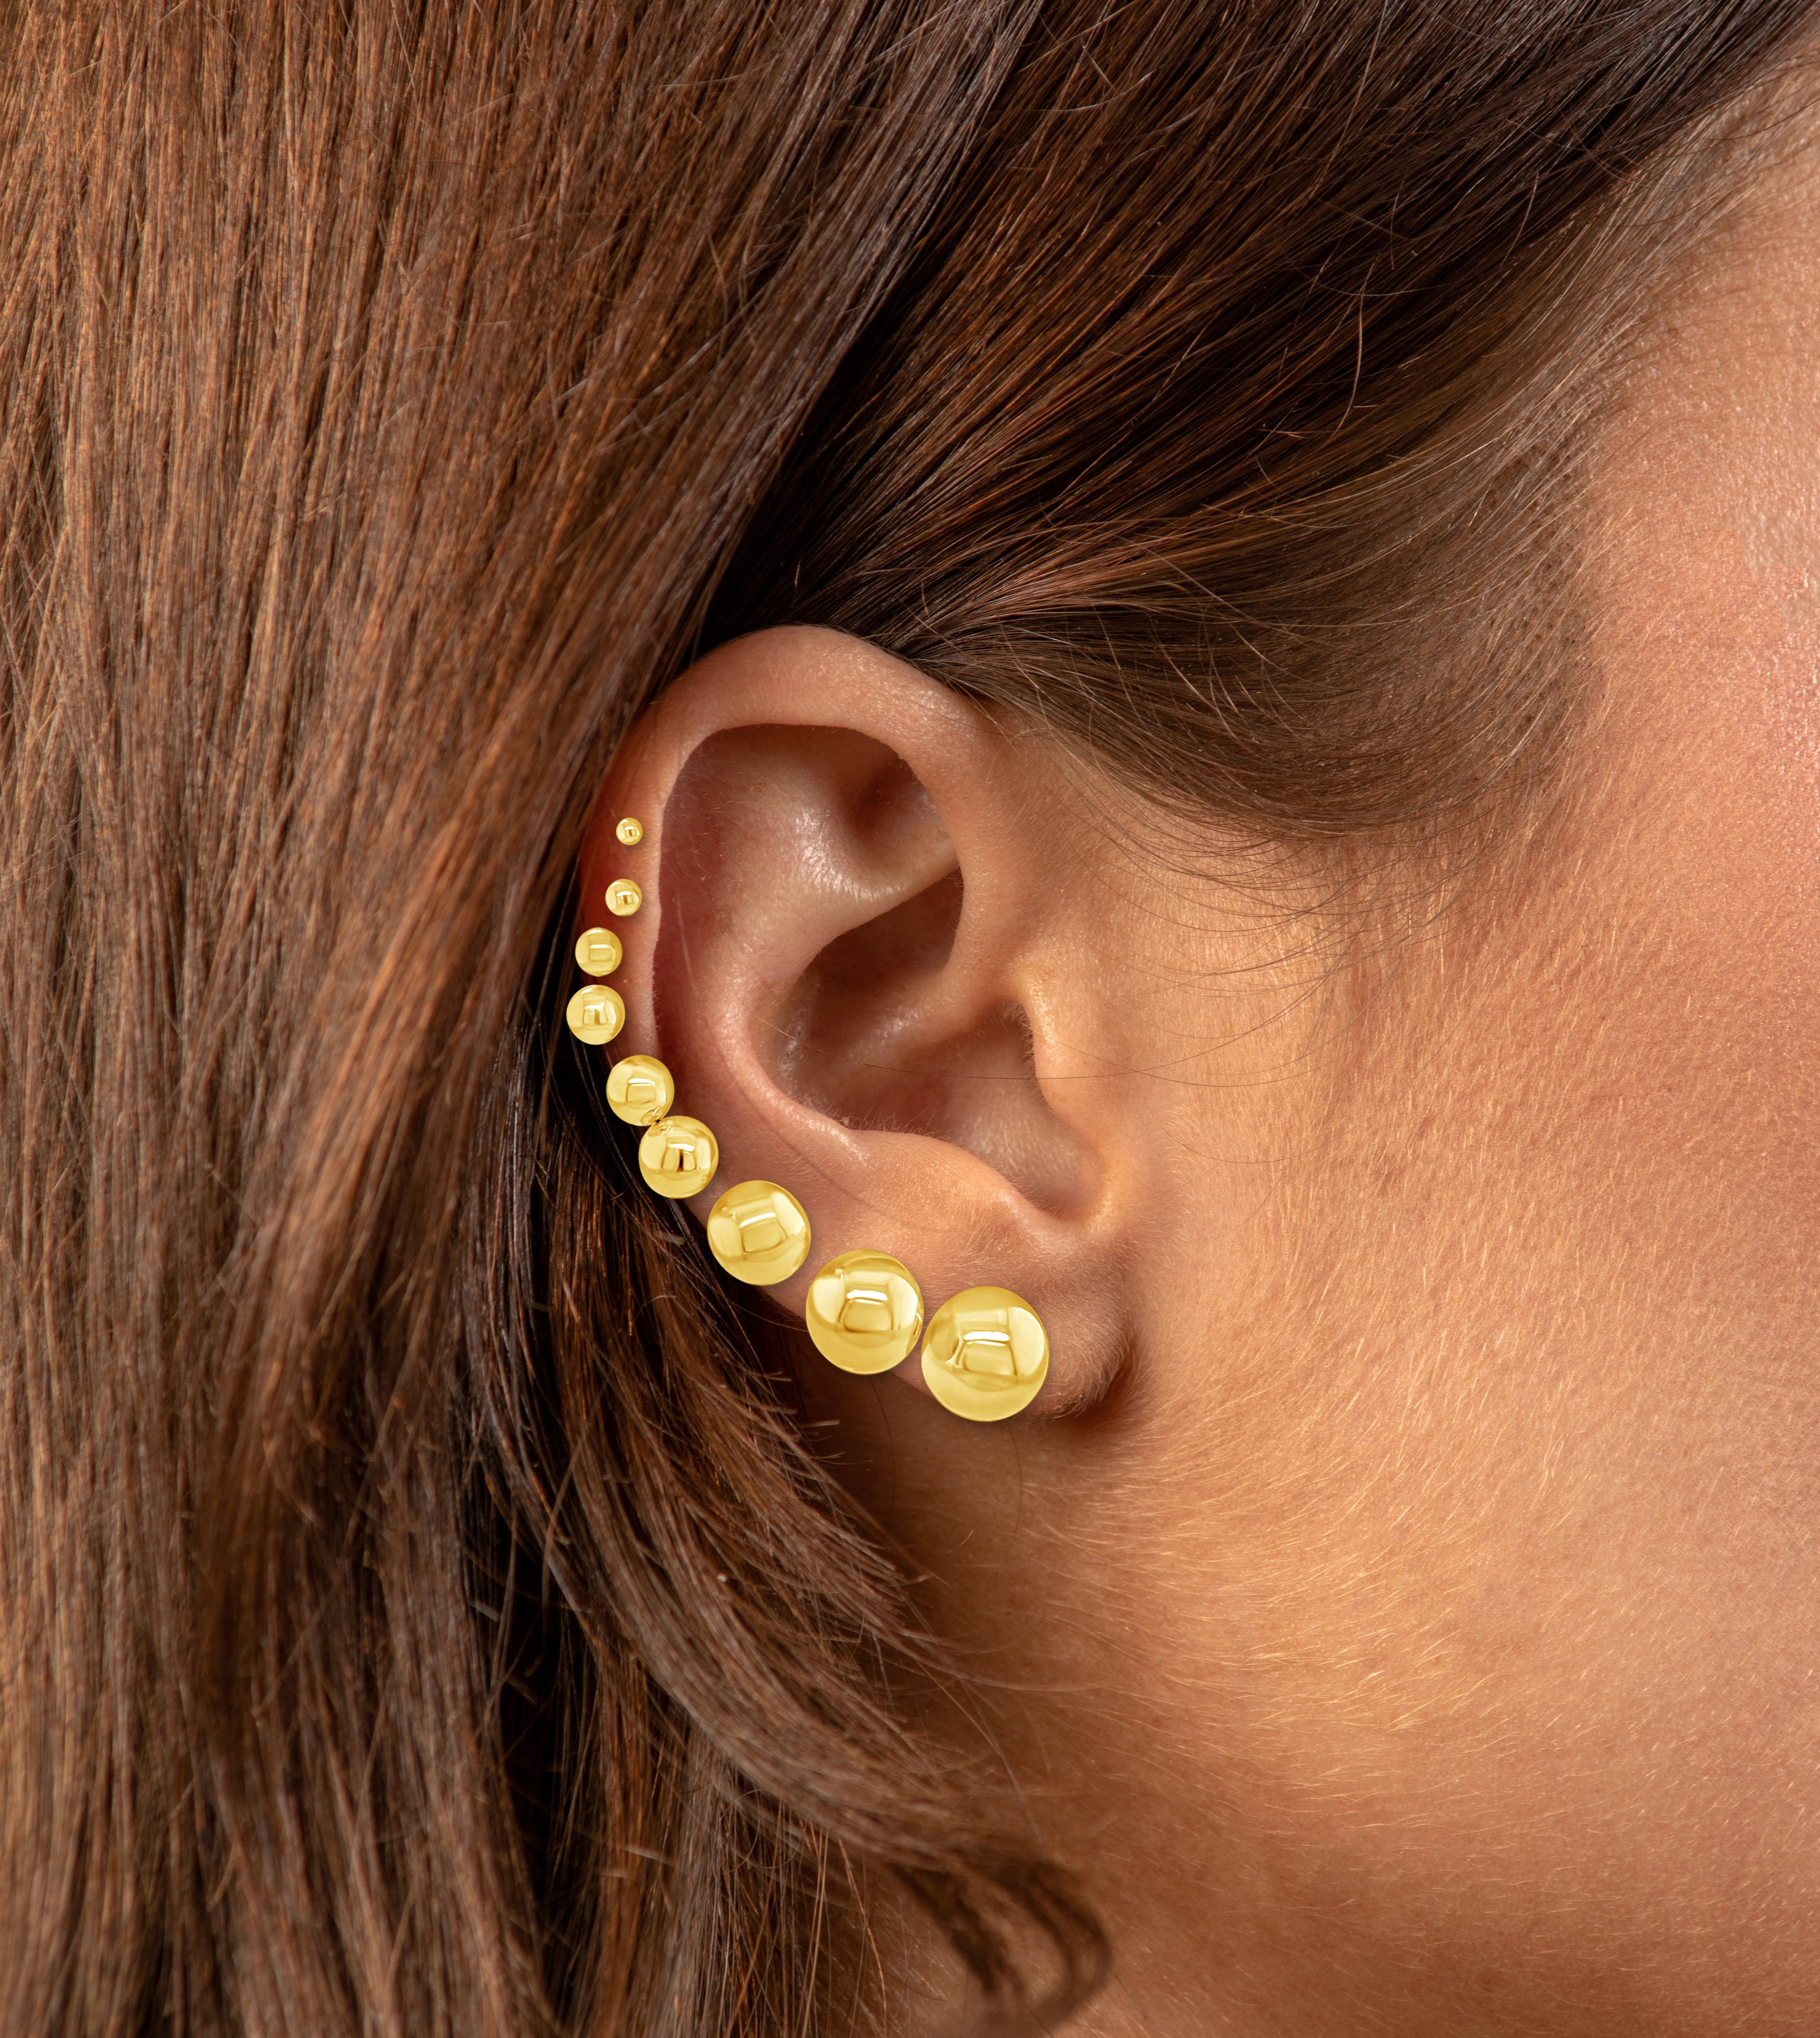 14K Yellow Gold Ball Stud Earrings, 6mm - Walmart.com